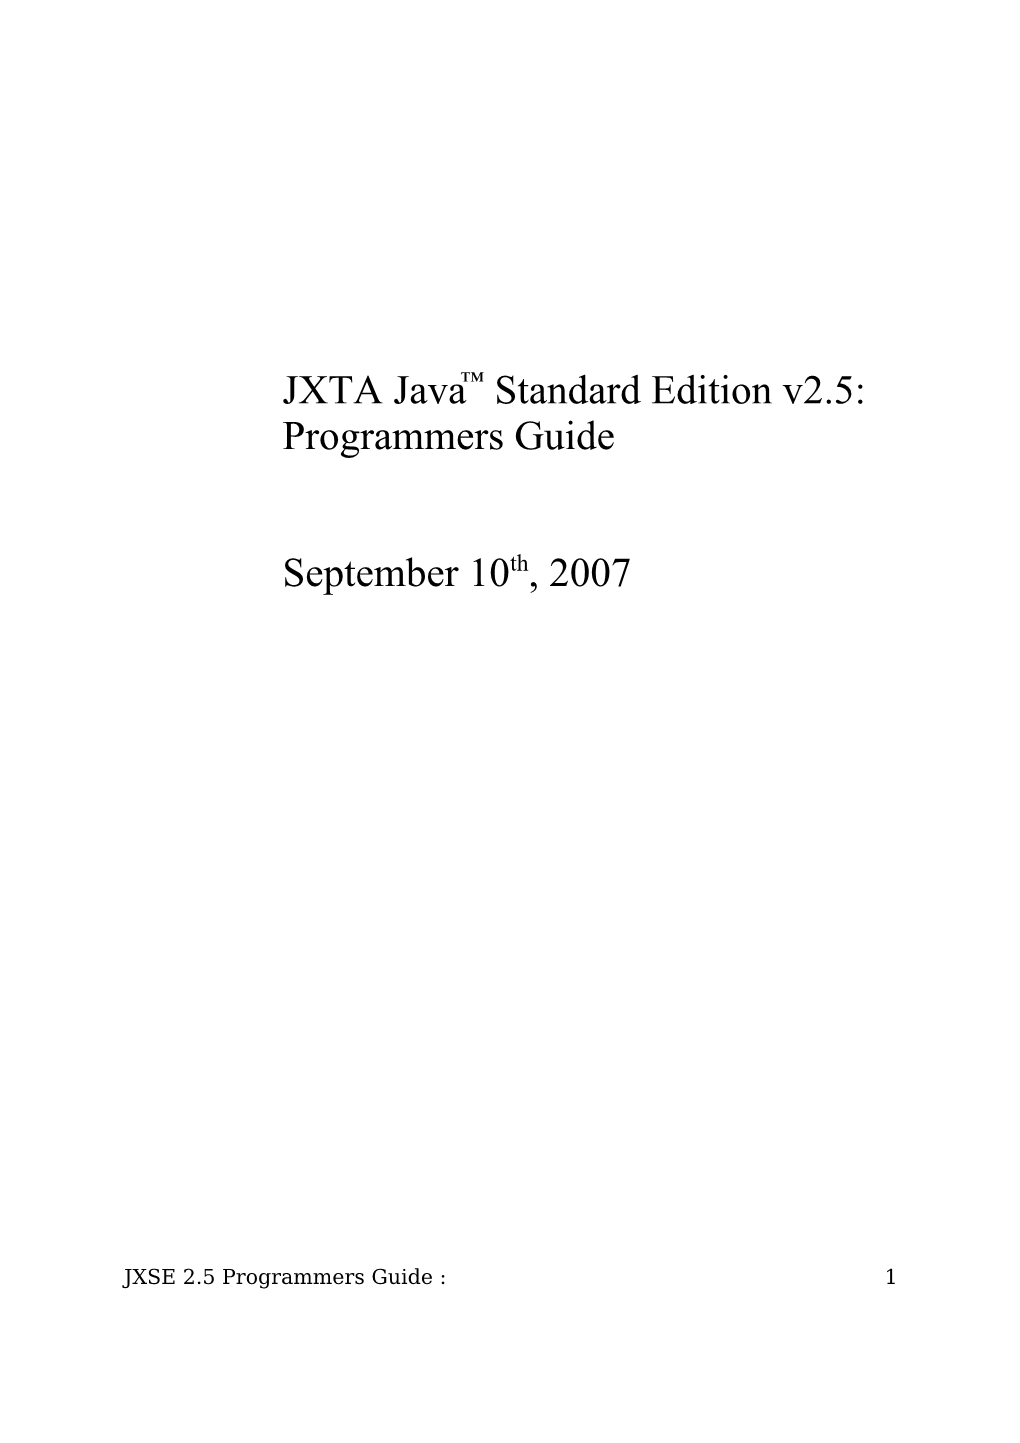 JXTA Java™ Standard Edition V2.5: Programmers Guide September